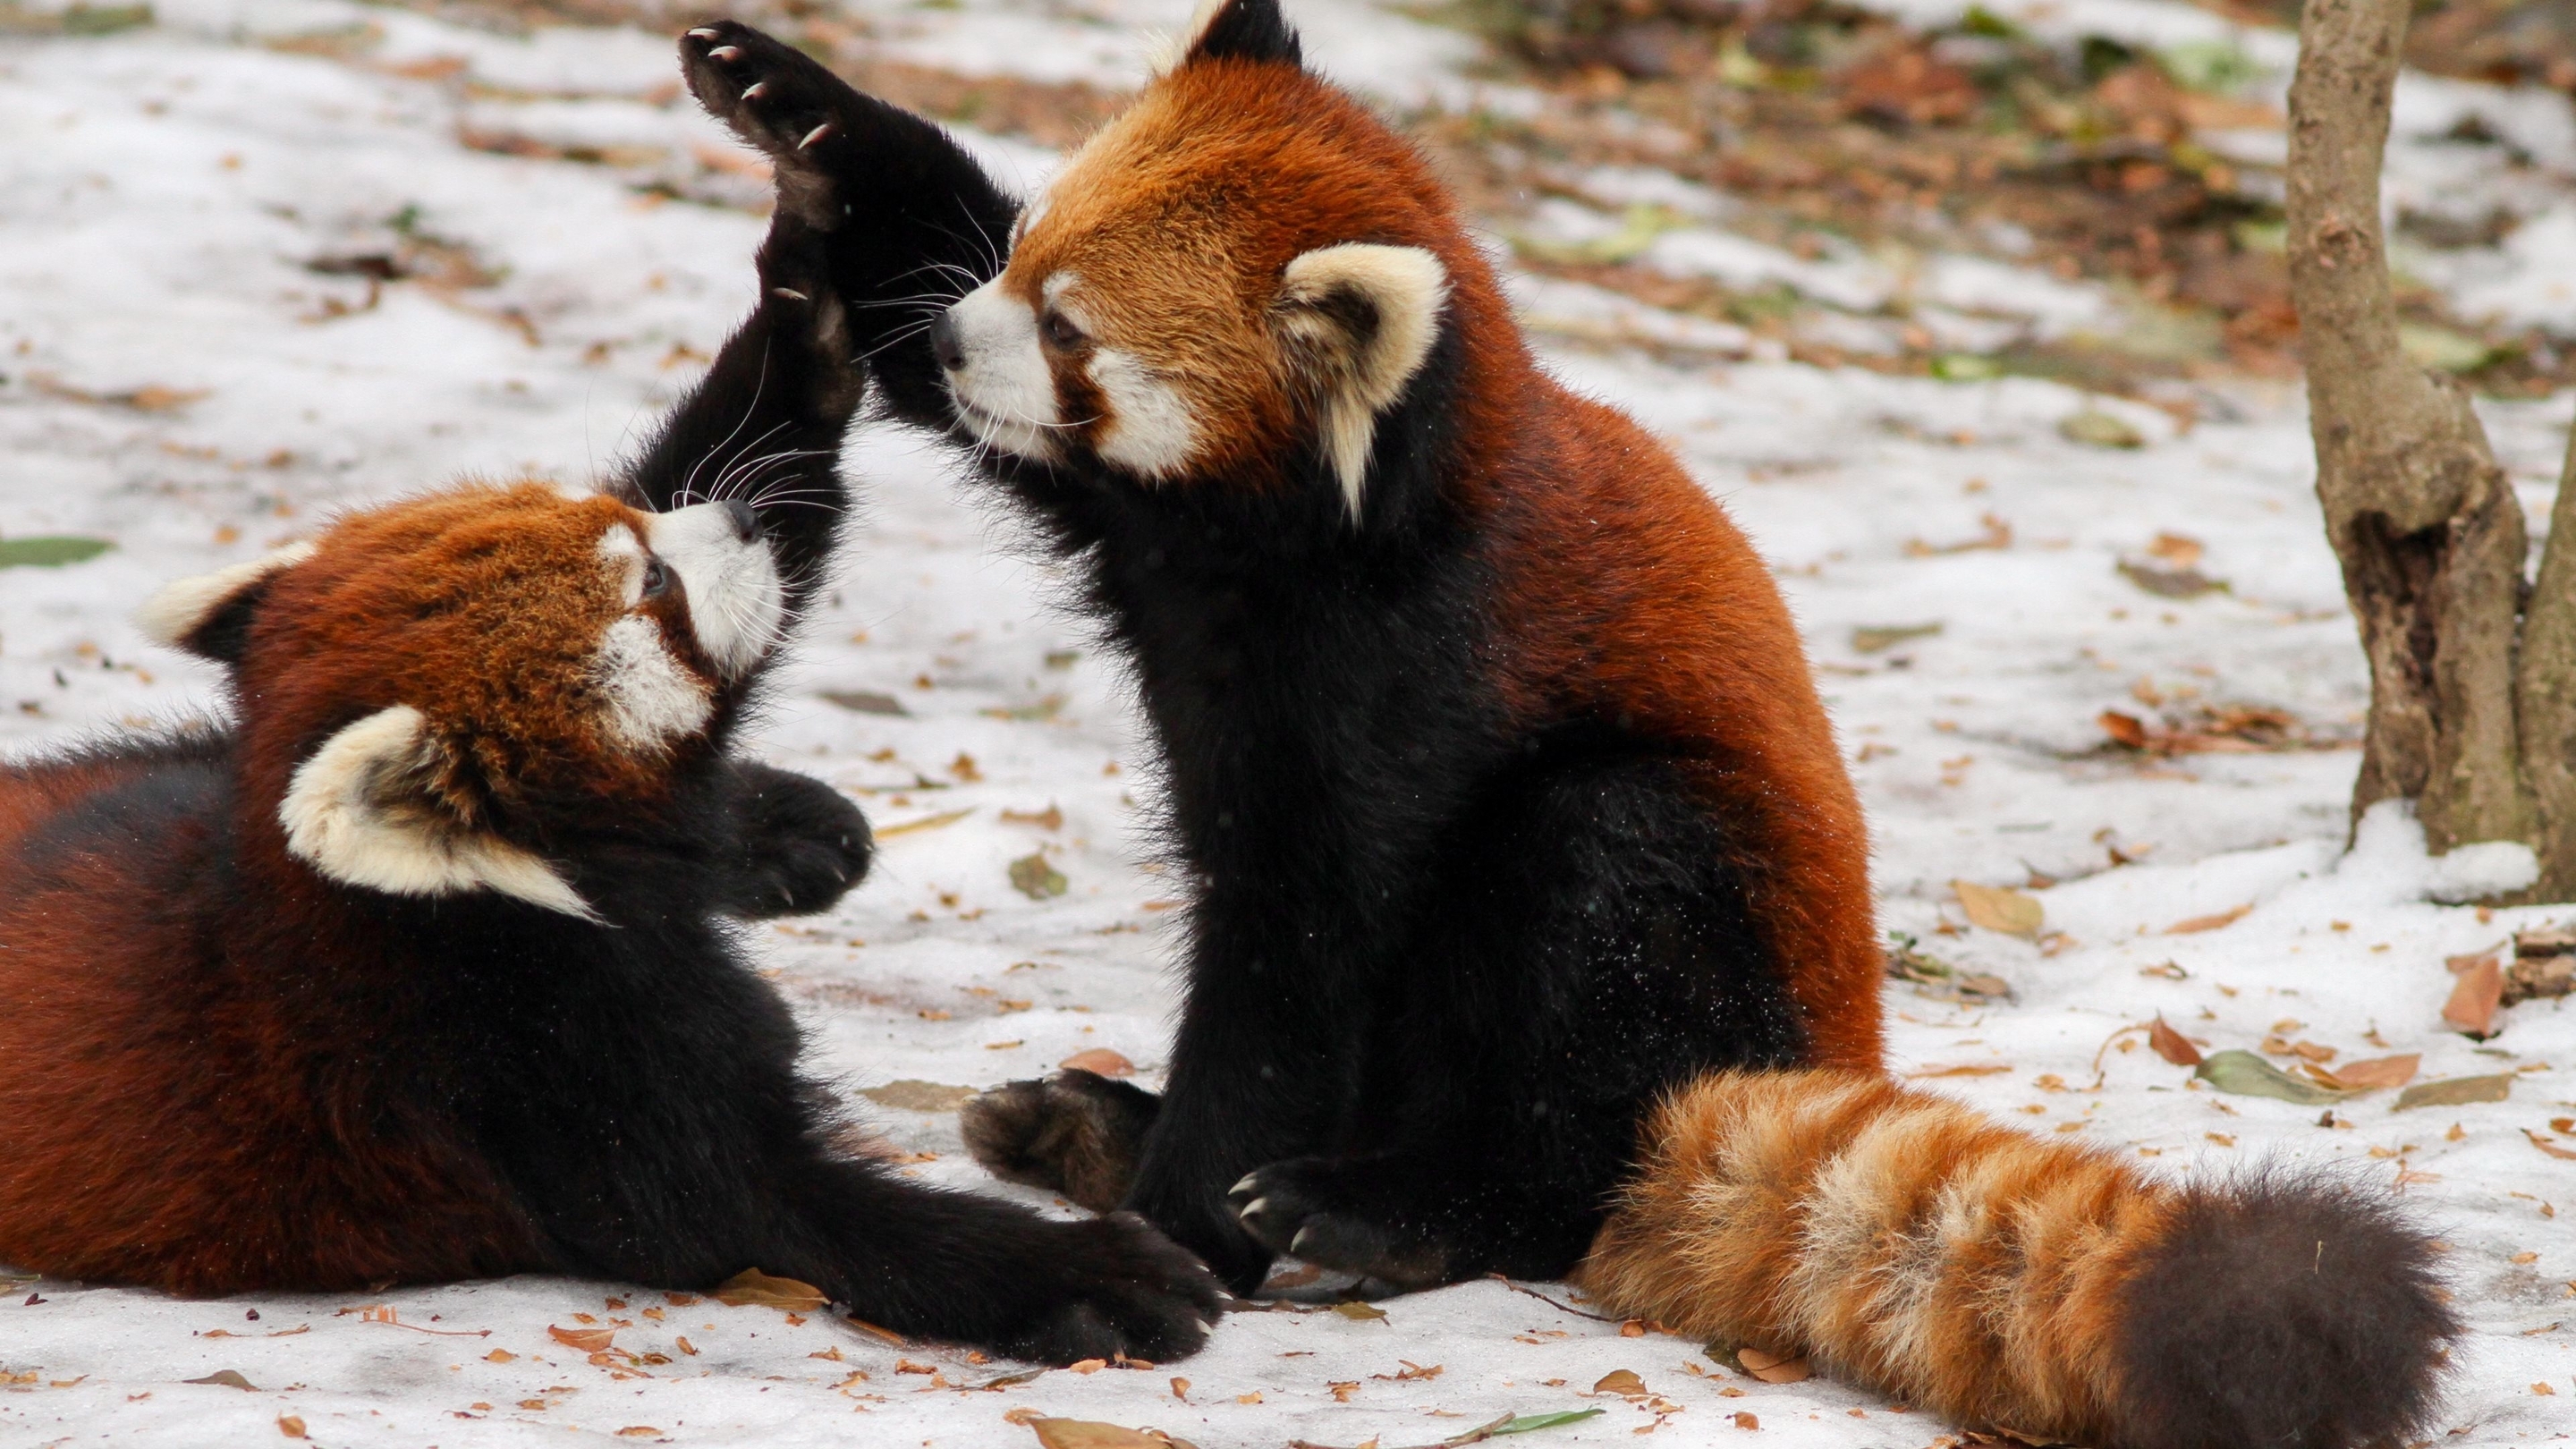 Картинка: Малая панда, пара, играют, зима, лапы, хвост